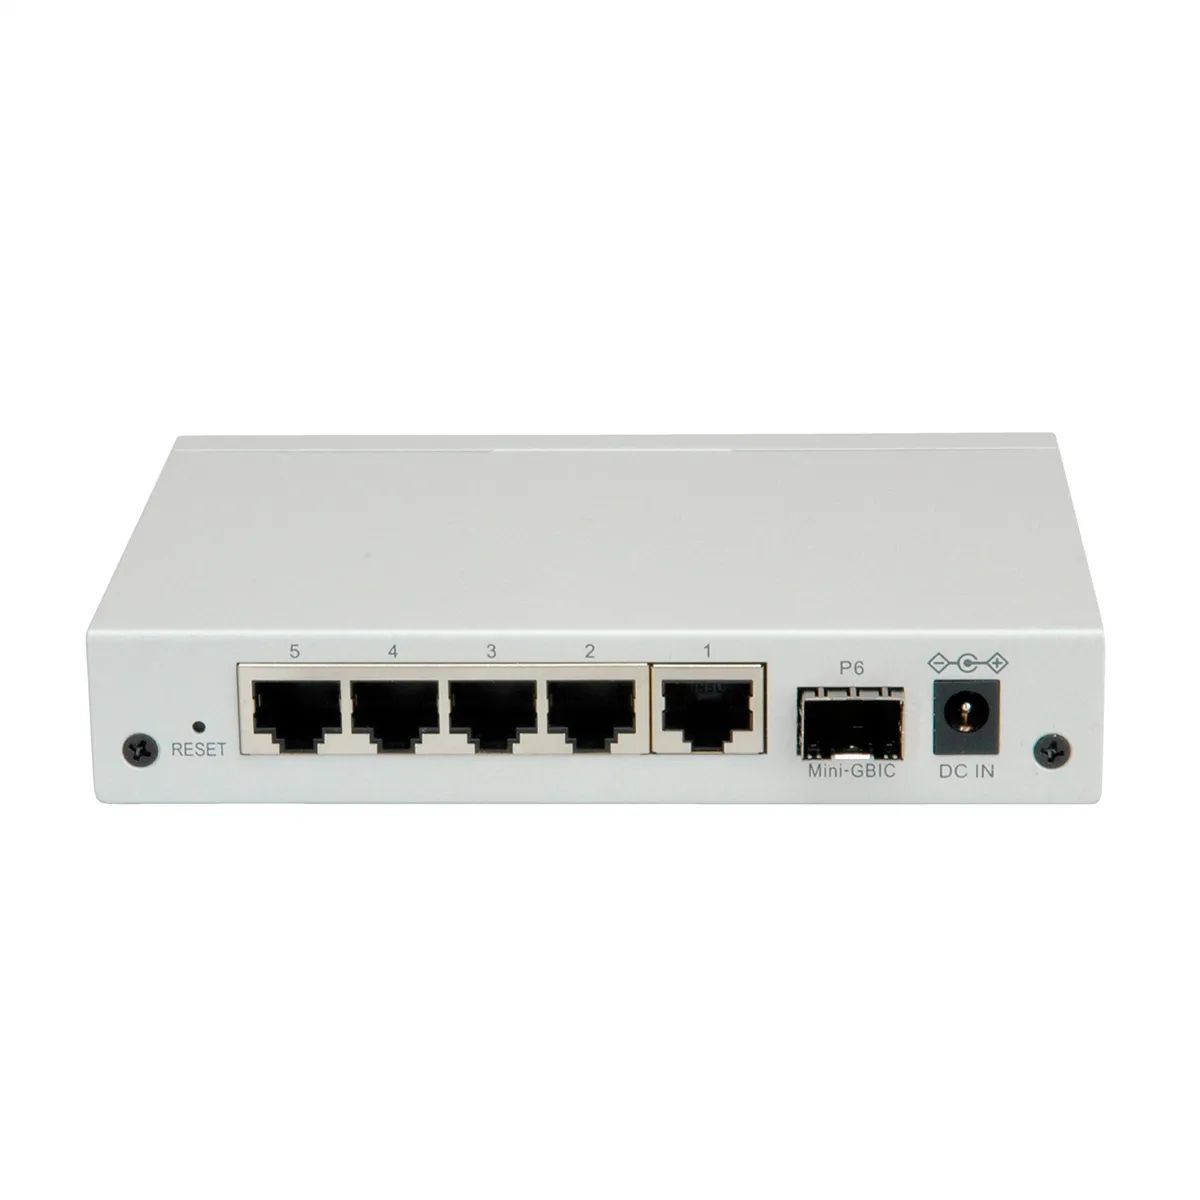  Ruiqas 2 Ports Network Switch, RJ45 Network Switch Box